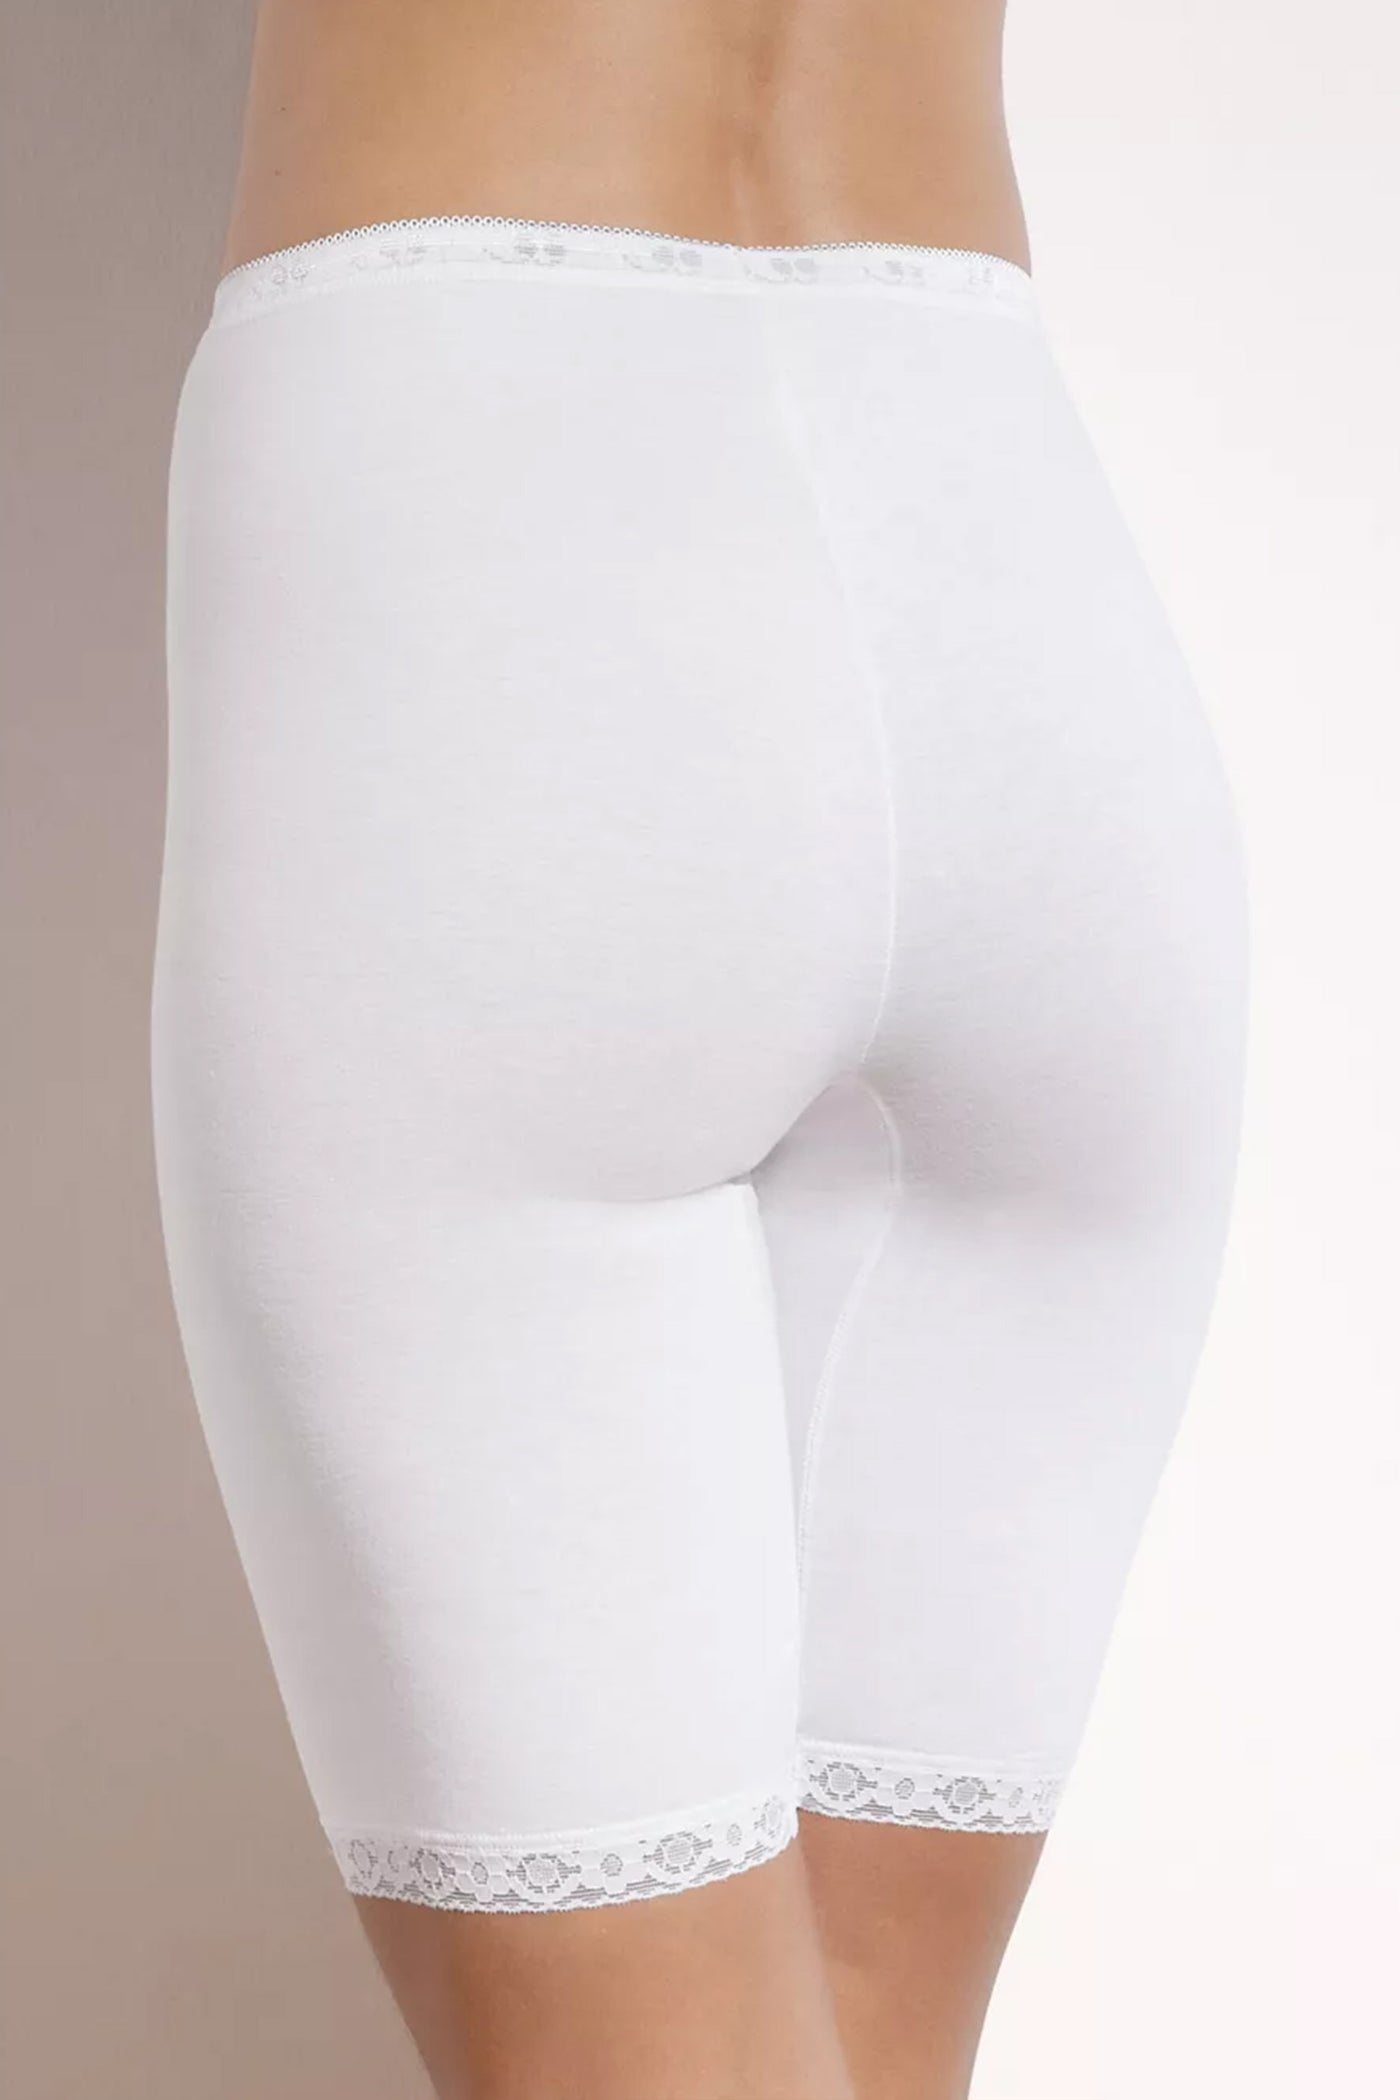 Long Line Panties by Sloggi - Women's Knickers - Carr & Westley